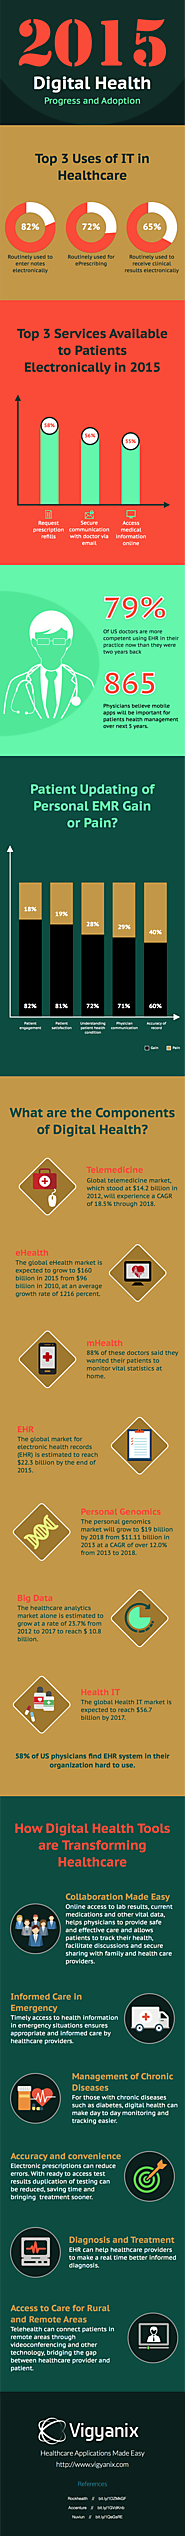 2015 Digital Health Progress and Adoption [infographic]